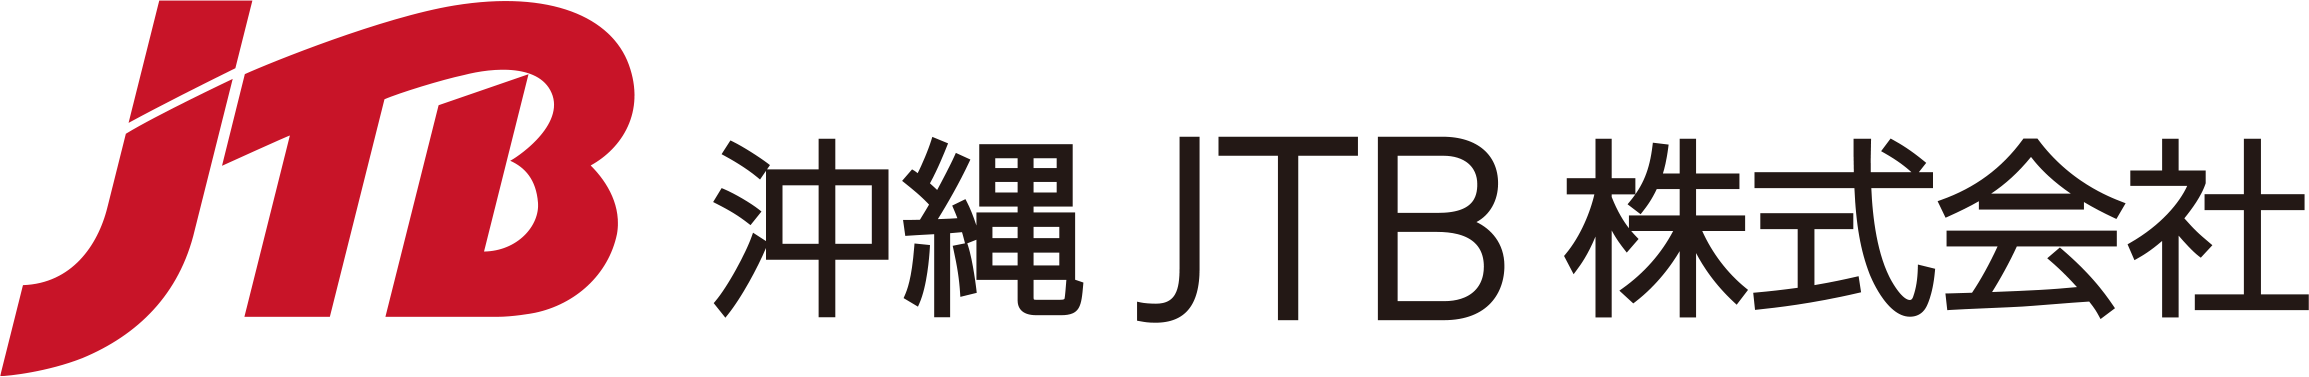 沖縄JTB